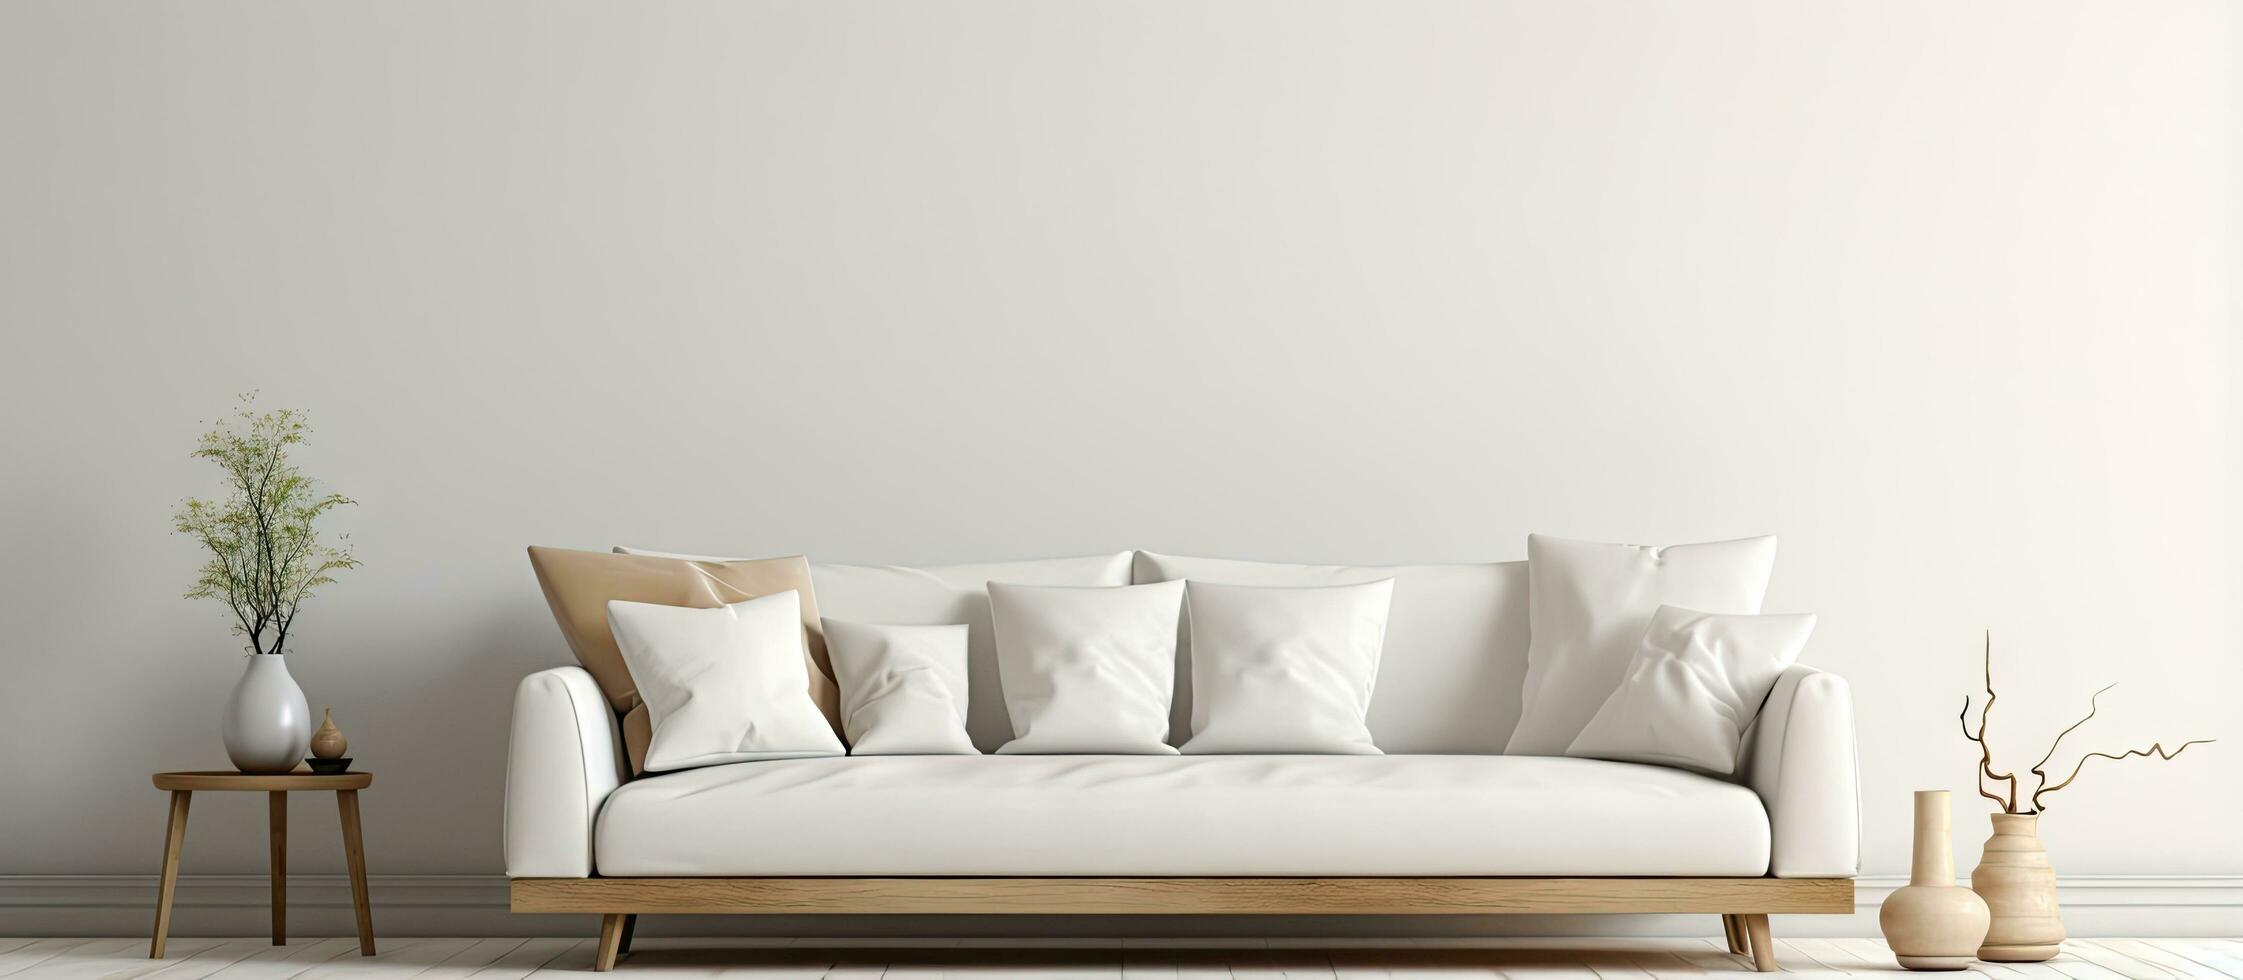 Minimalist white room with sofa in Scandinavian style interior visual representation photo